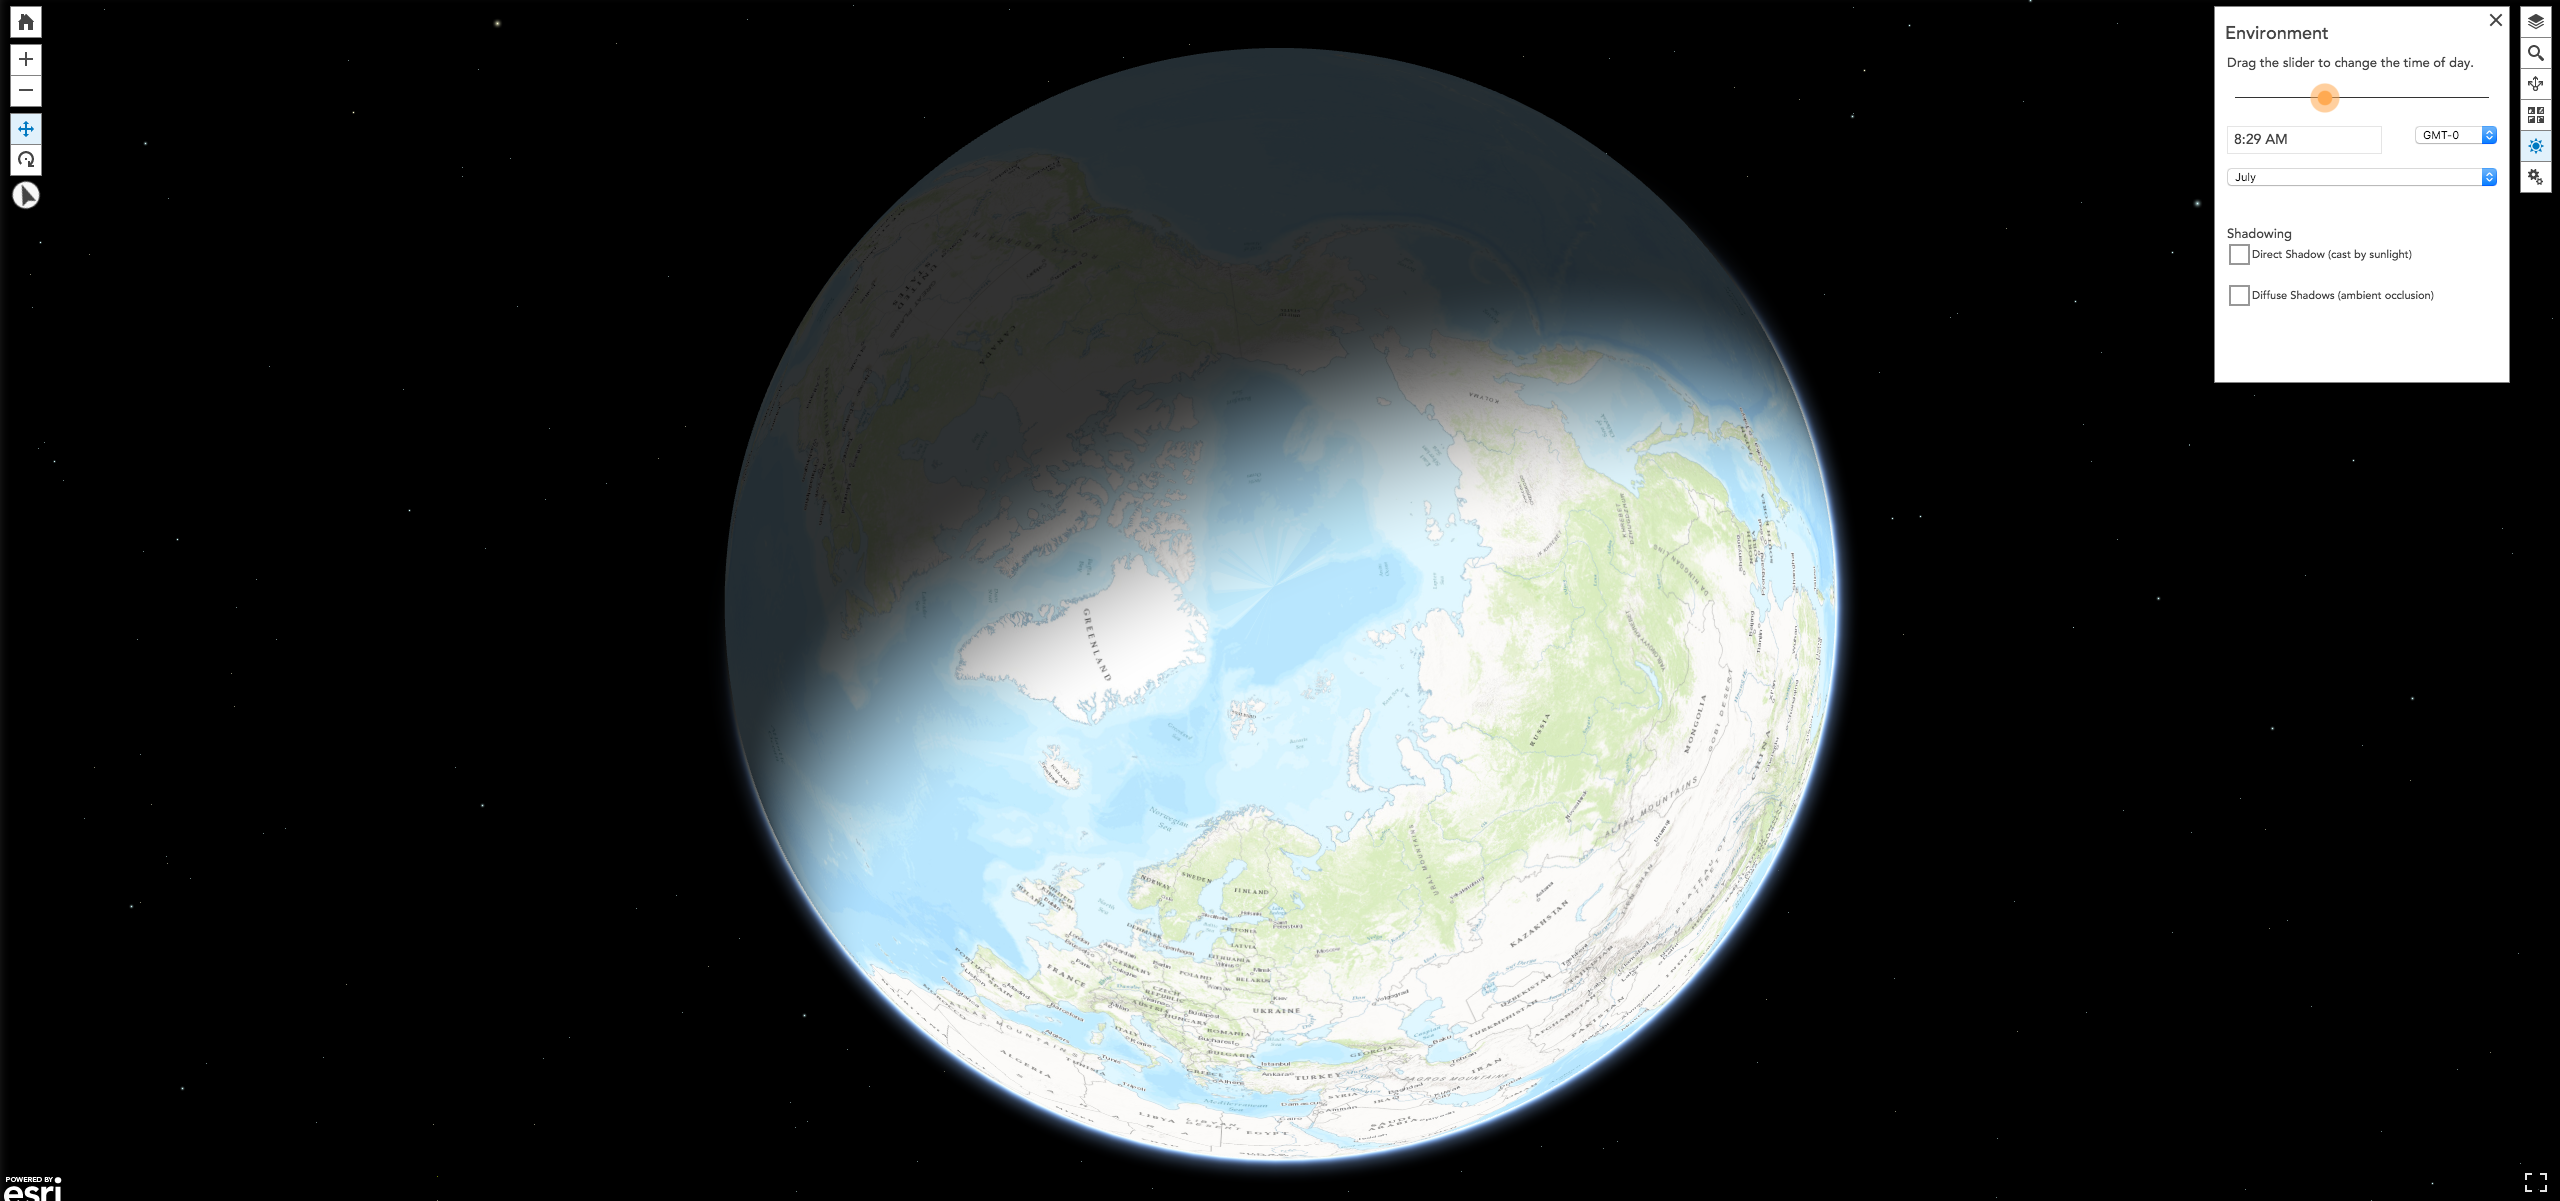 polar regions of earth